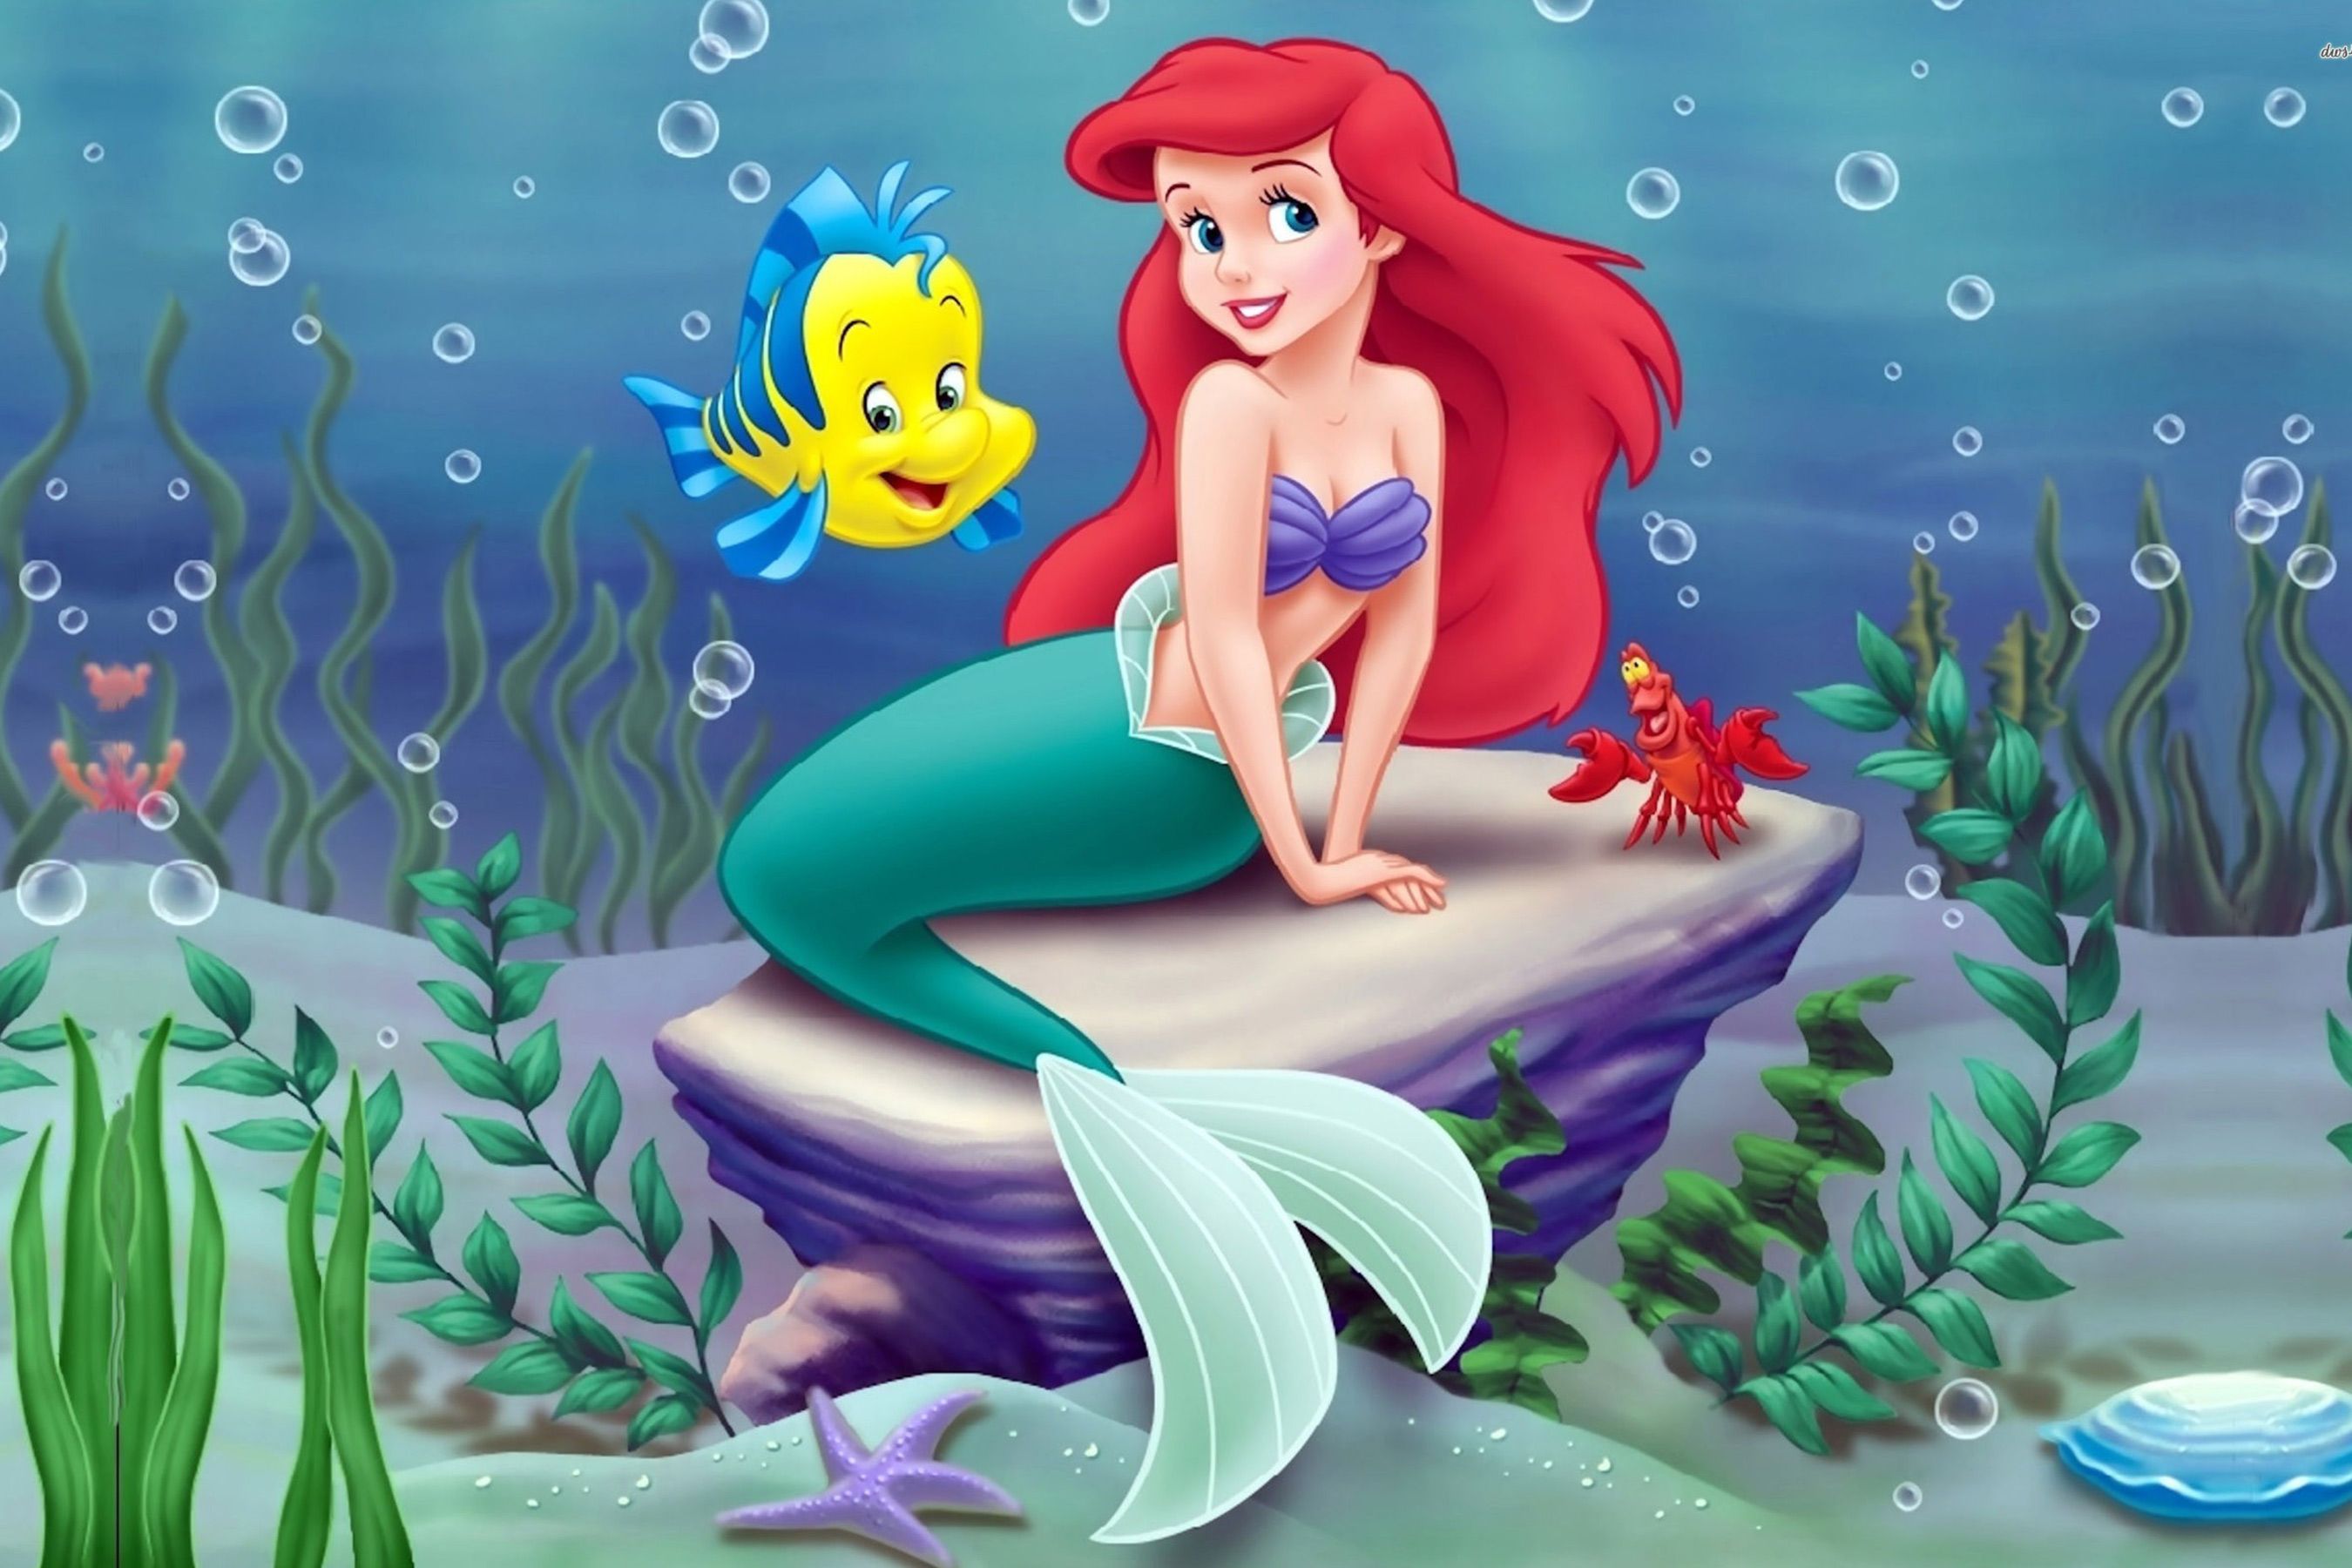 Little Mermaid Live Action Remake Cast Premiere Date Trailer